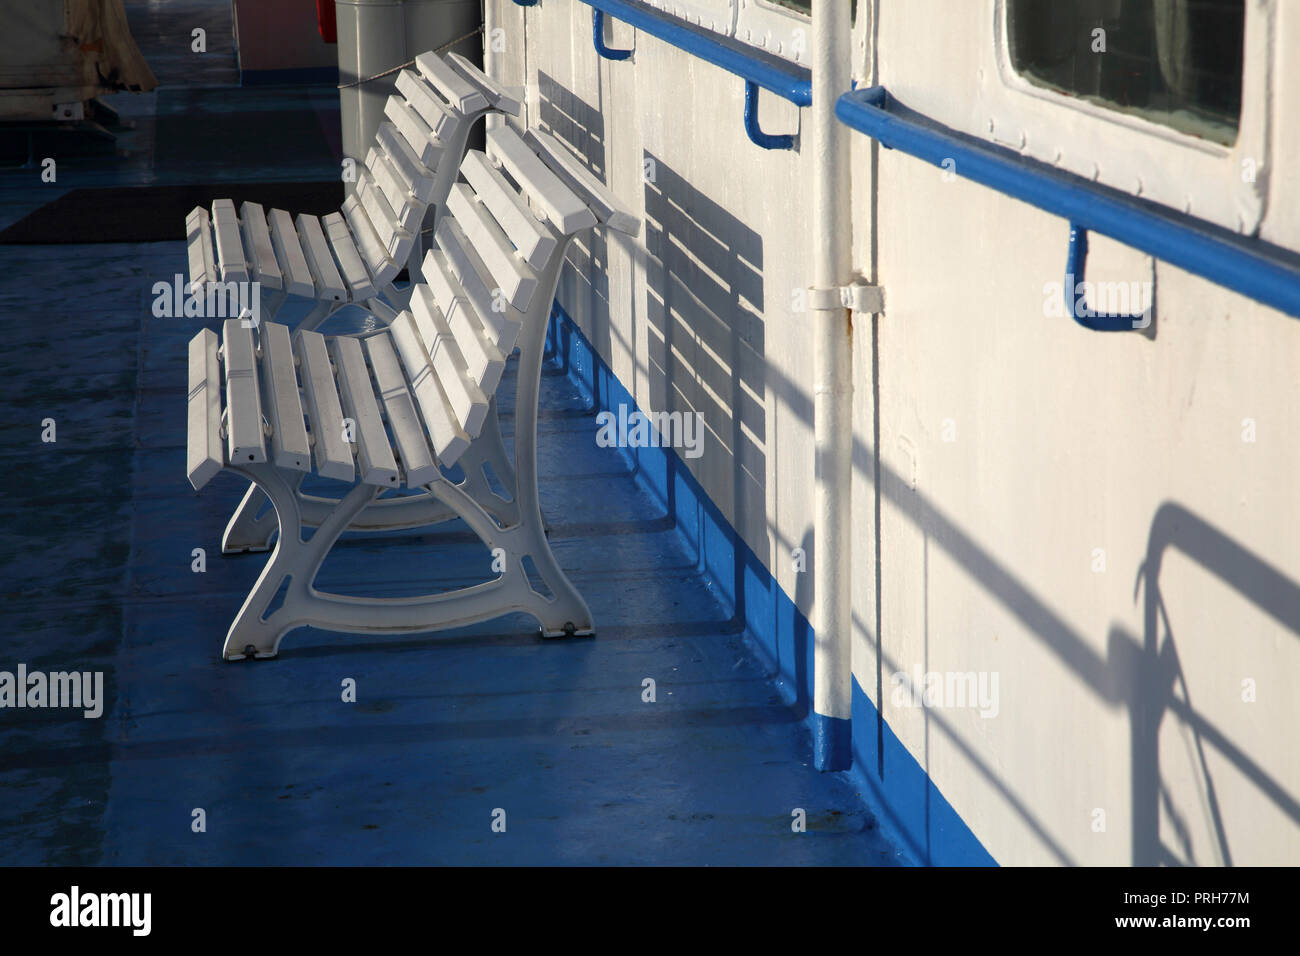 Lavrio Port Attica Greece Seats on Ferry casting Shadows Stock Photo